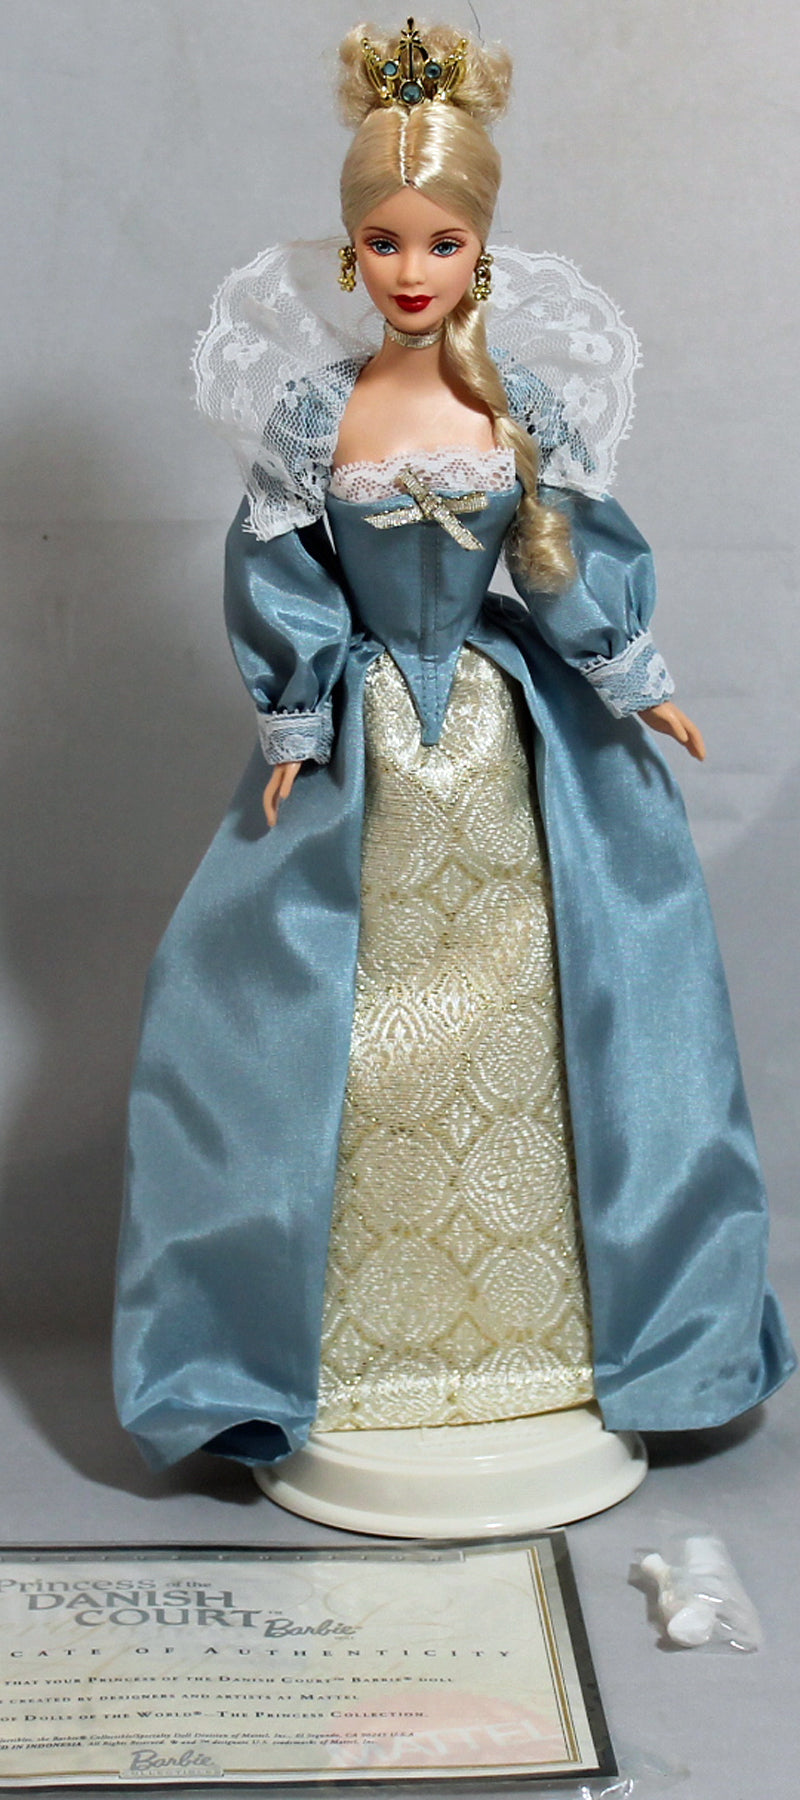 2002 Danish Court Barbie (56216)